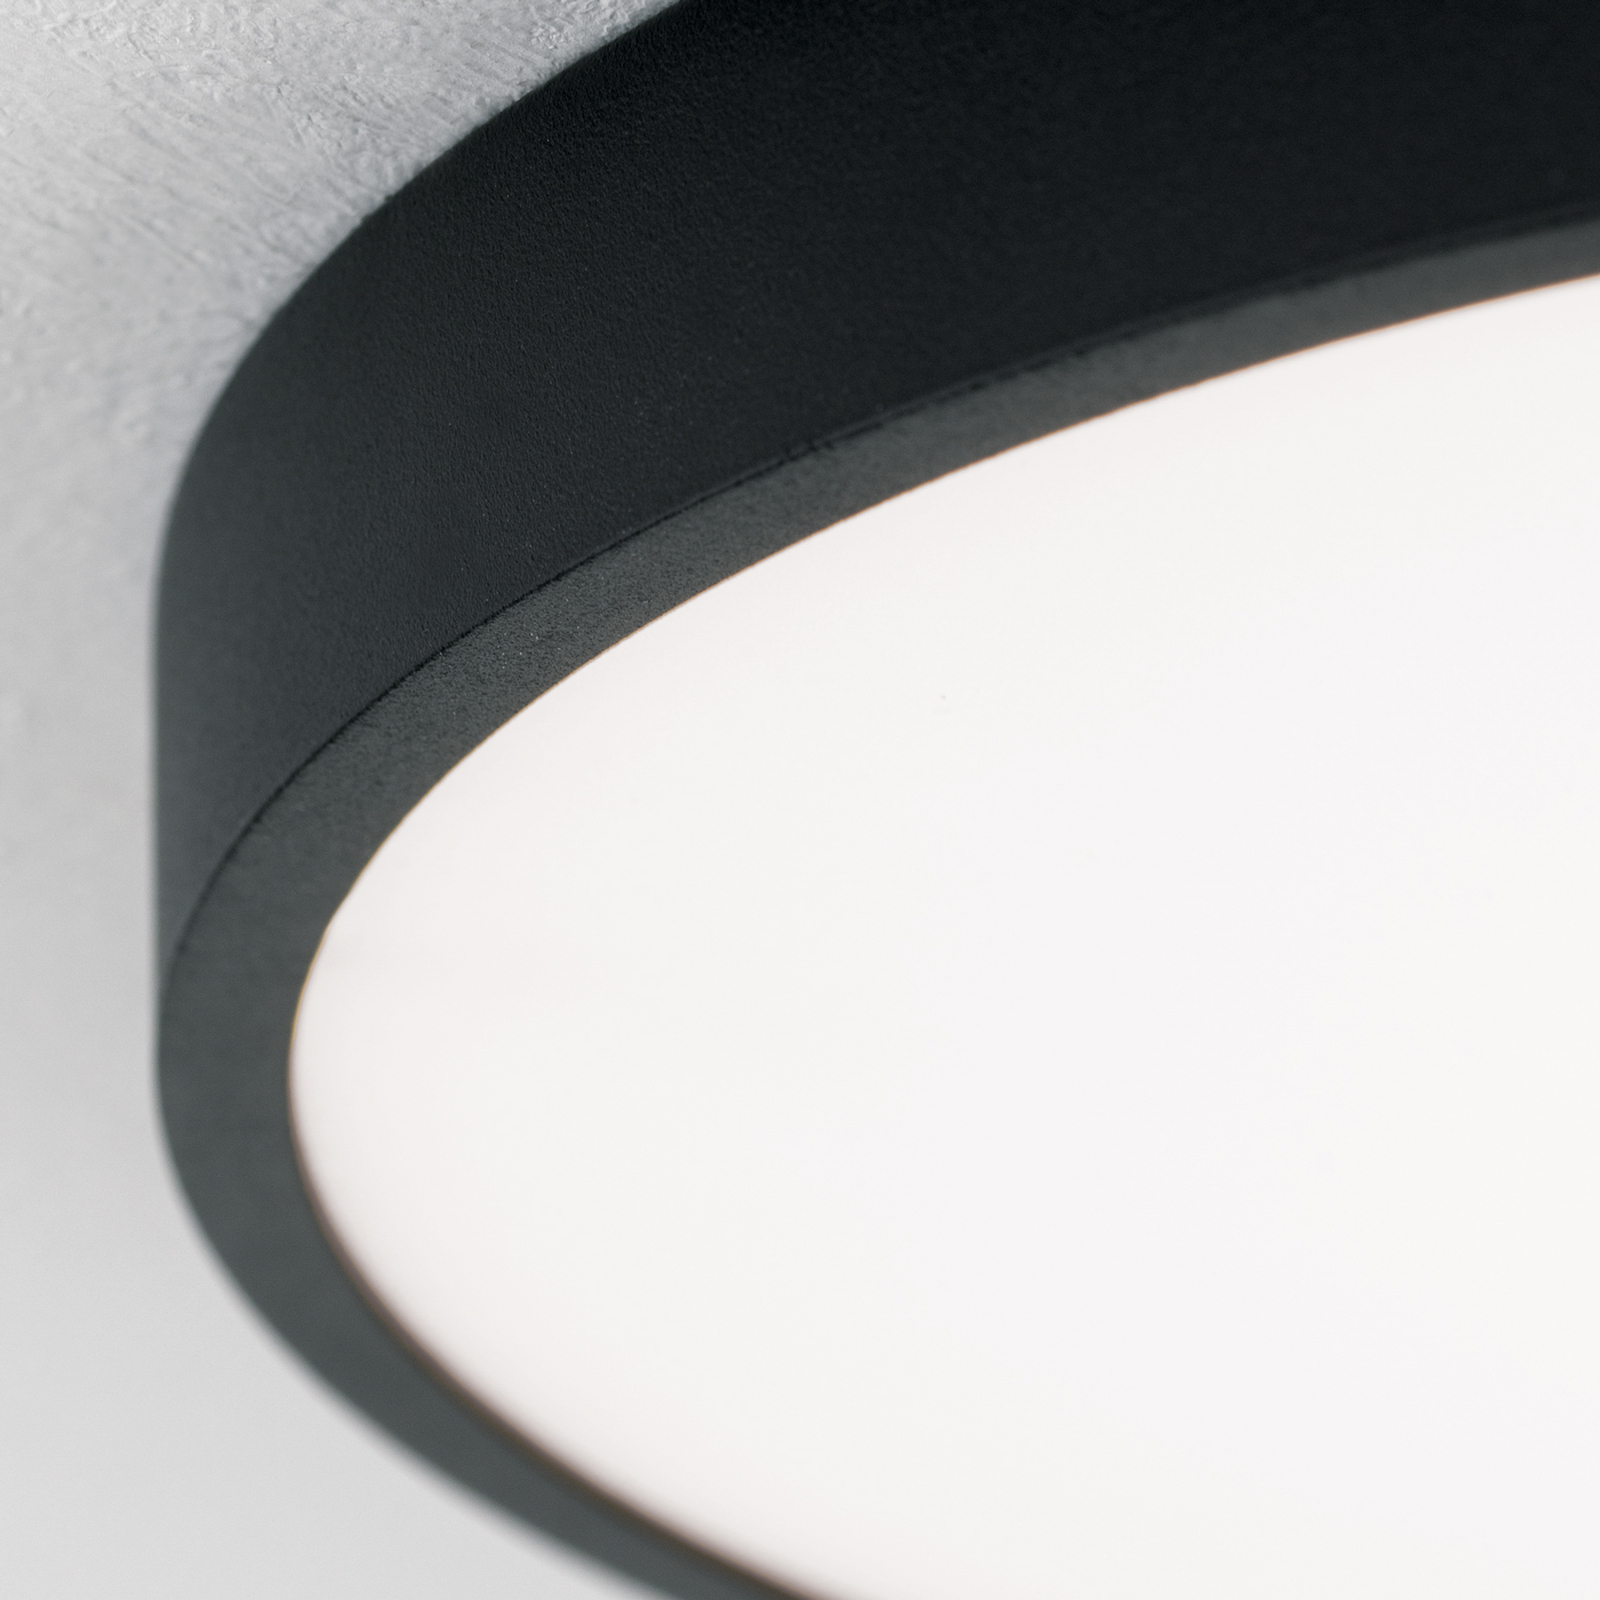 Bully LED plafondlamp in zwart, 3.000 K, Ø28cm